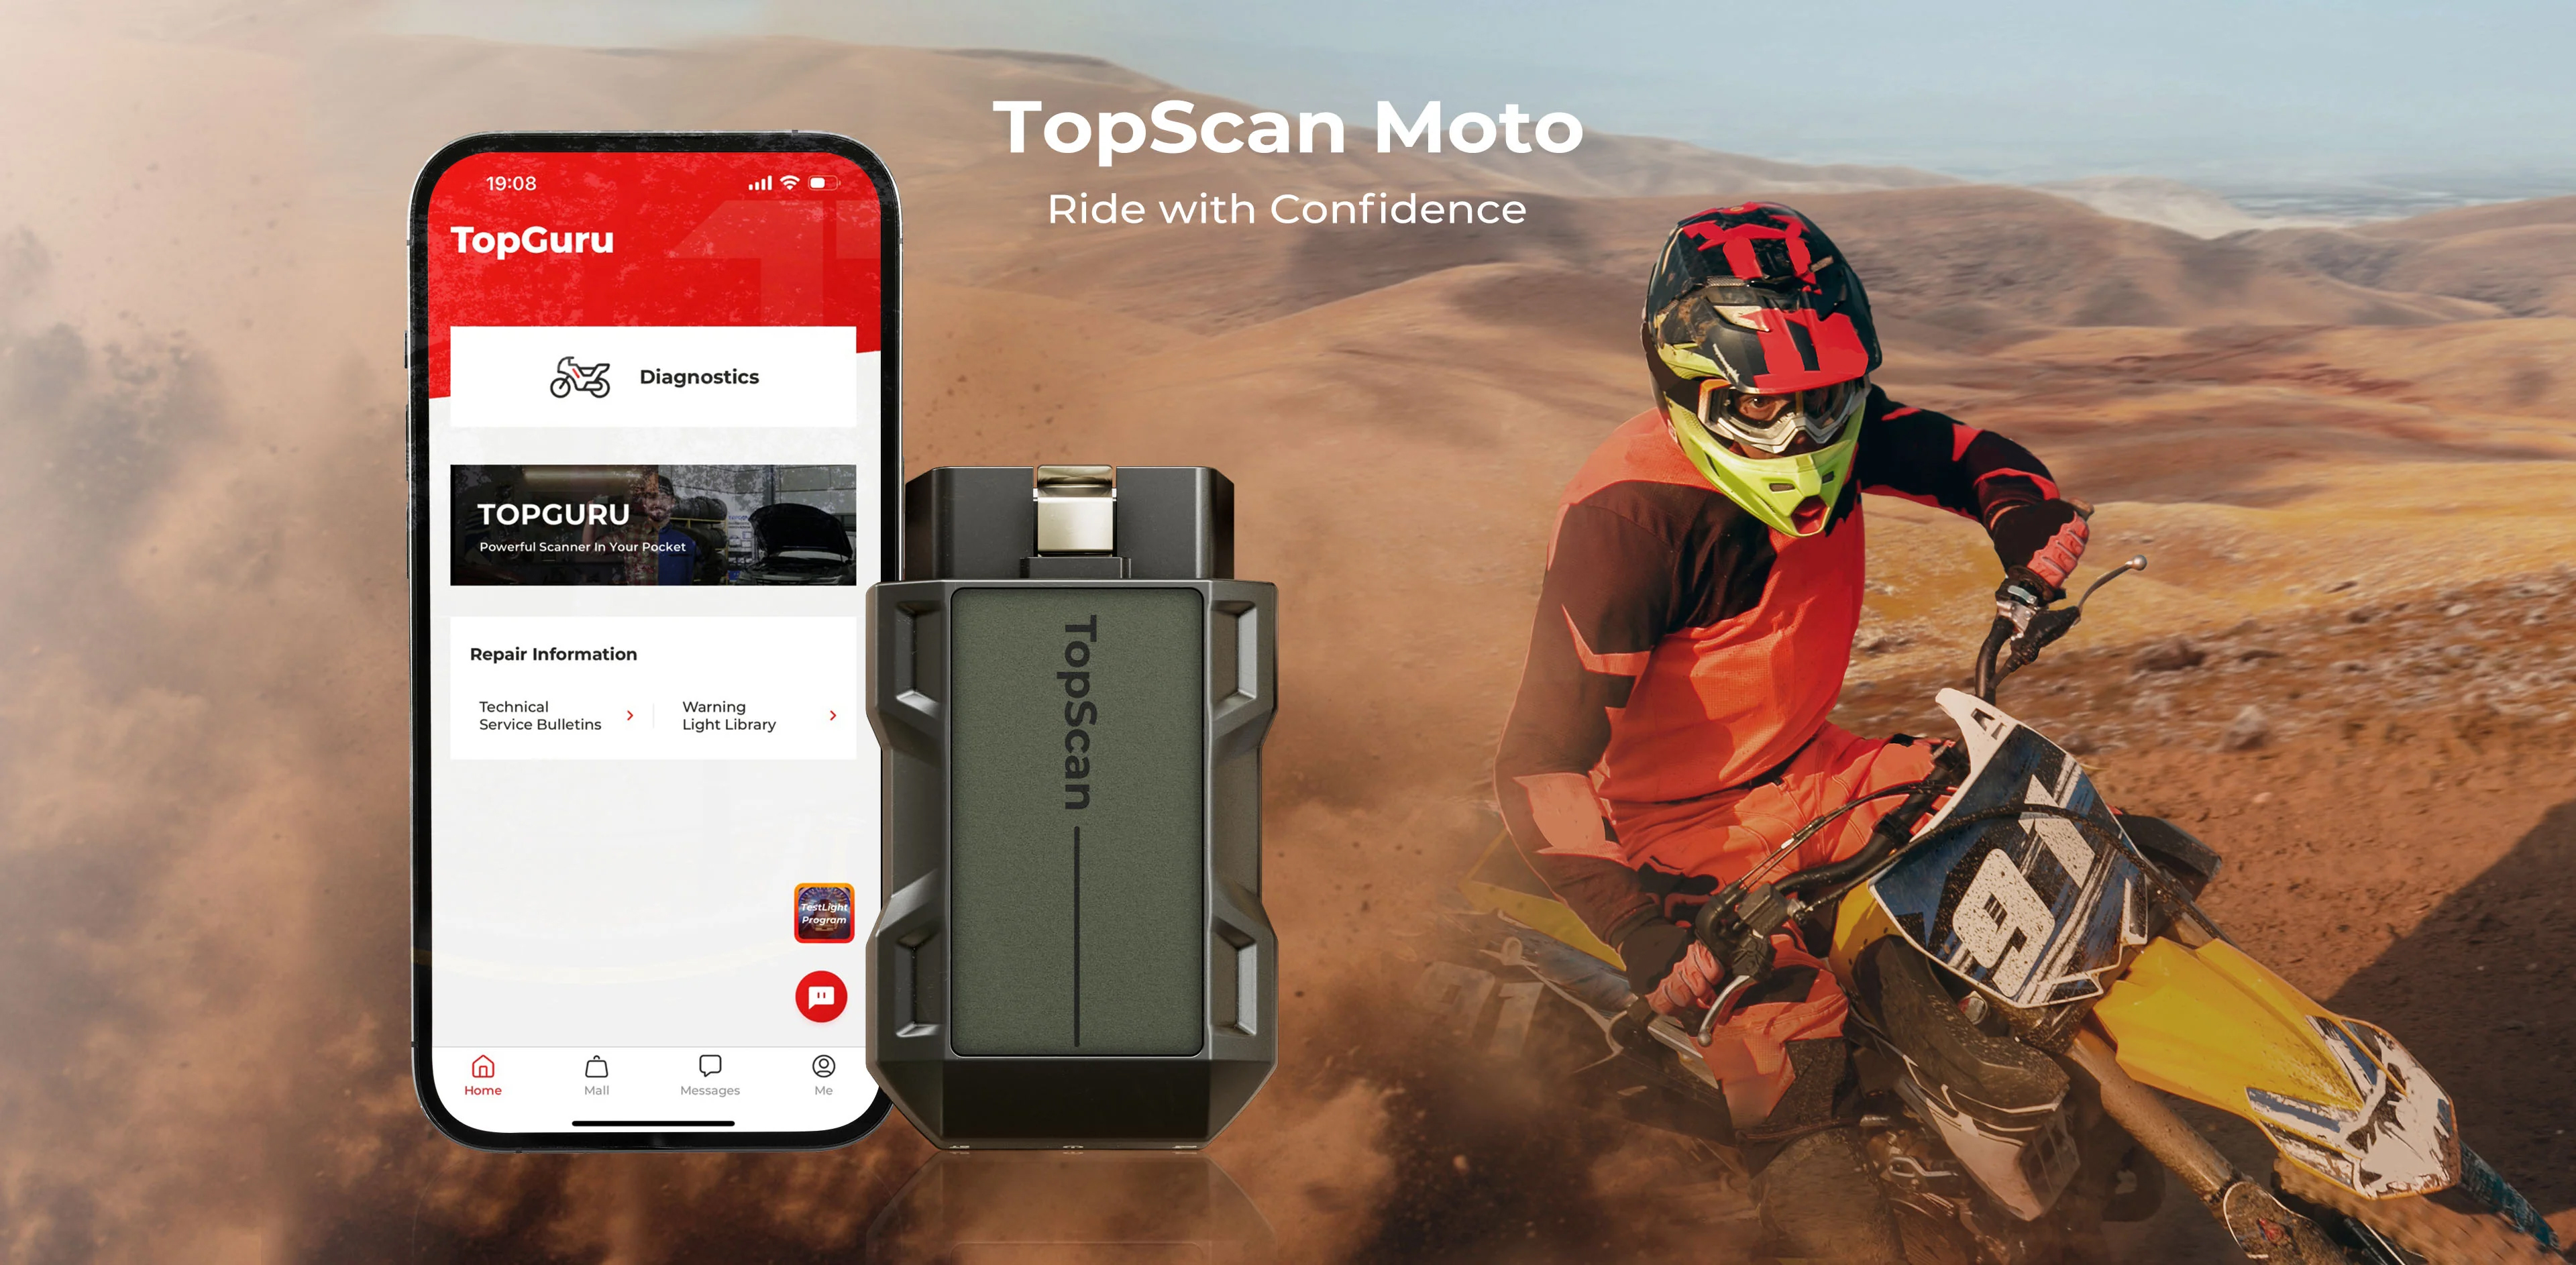 TopScan Moto